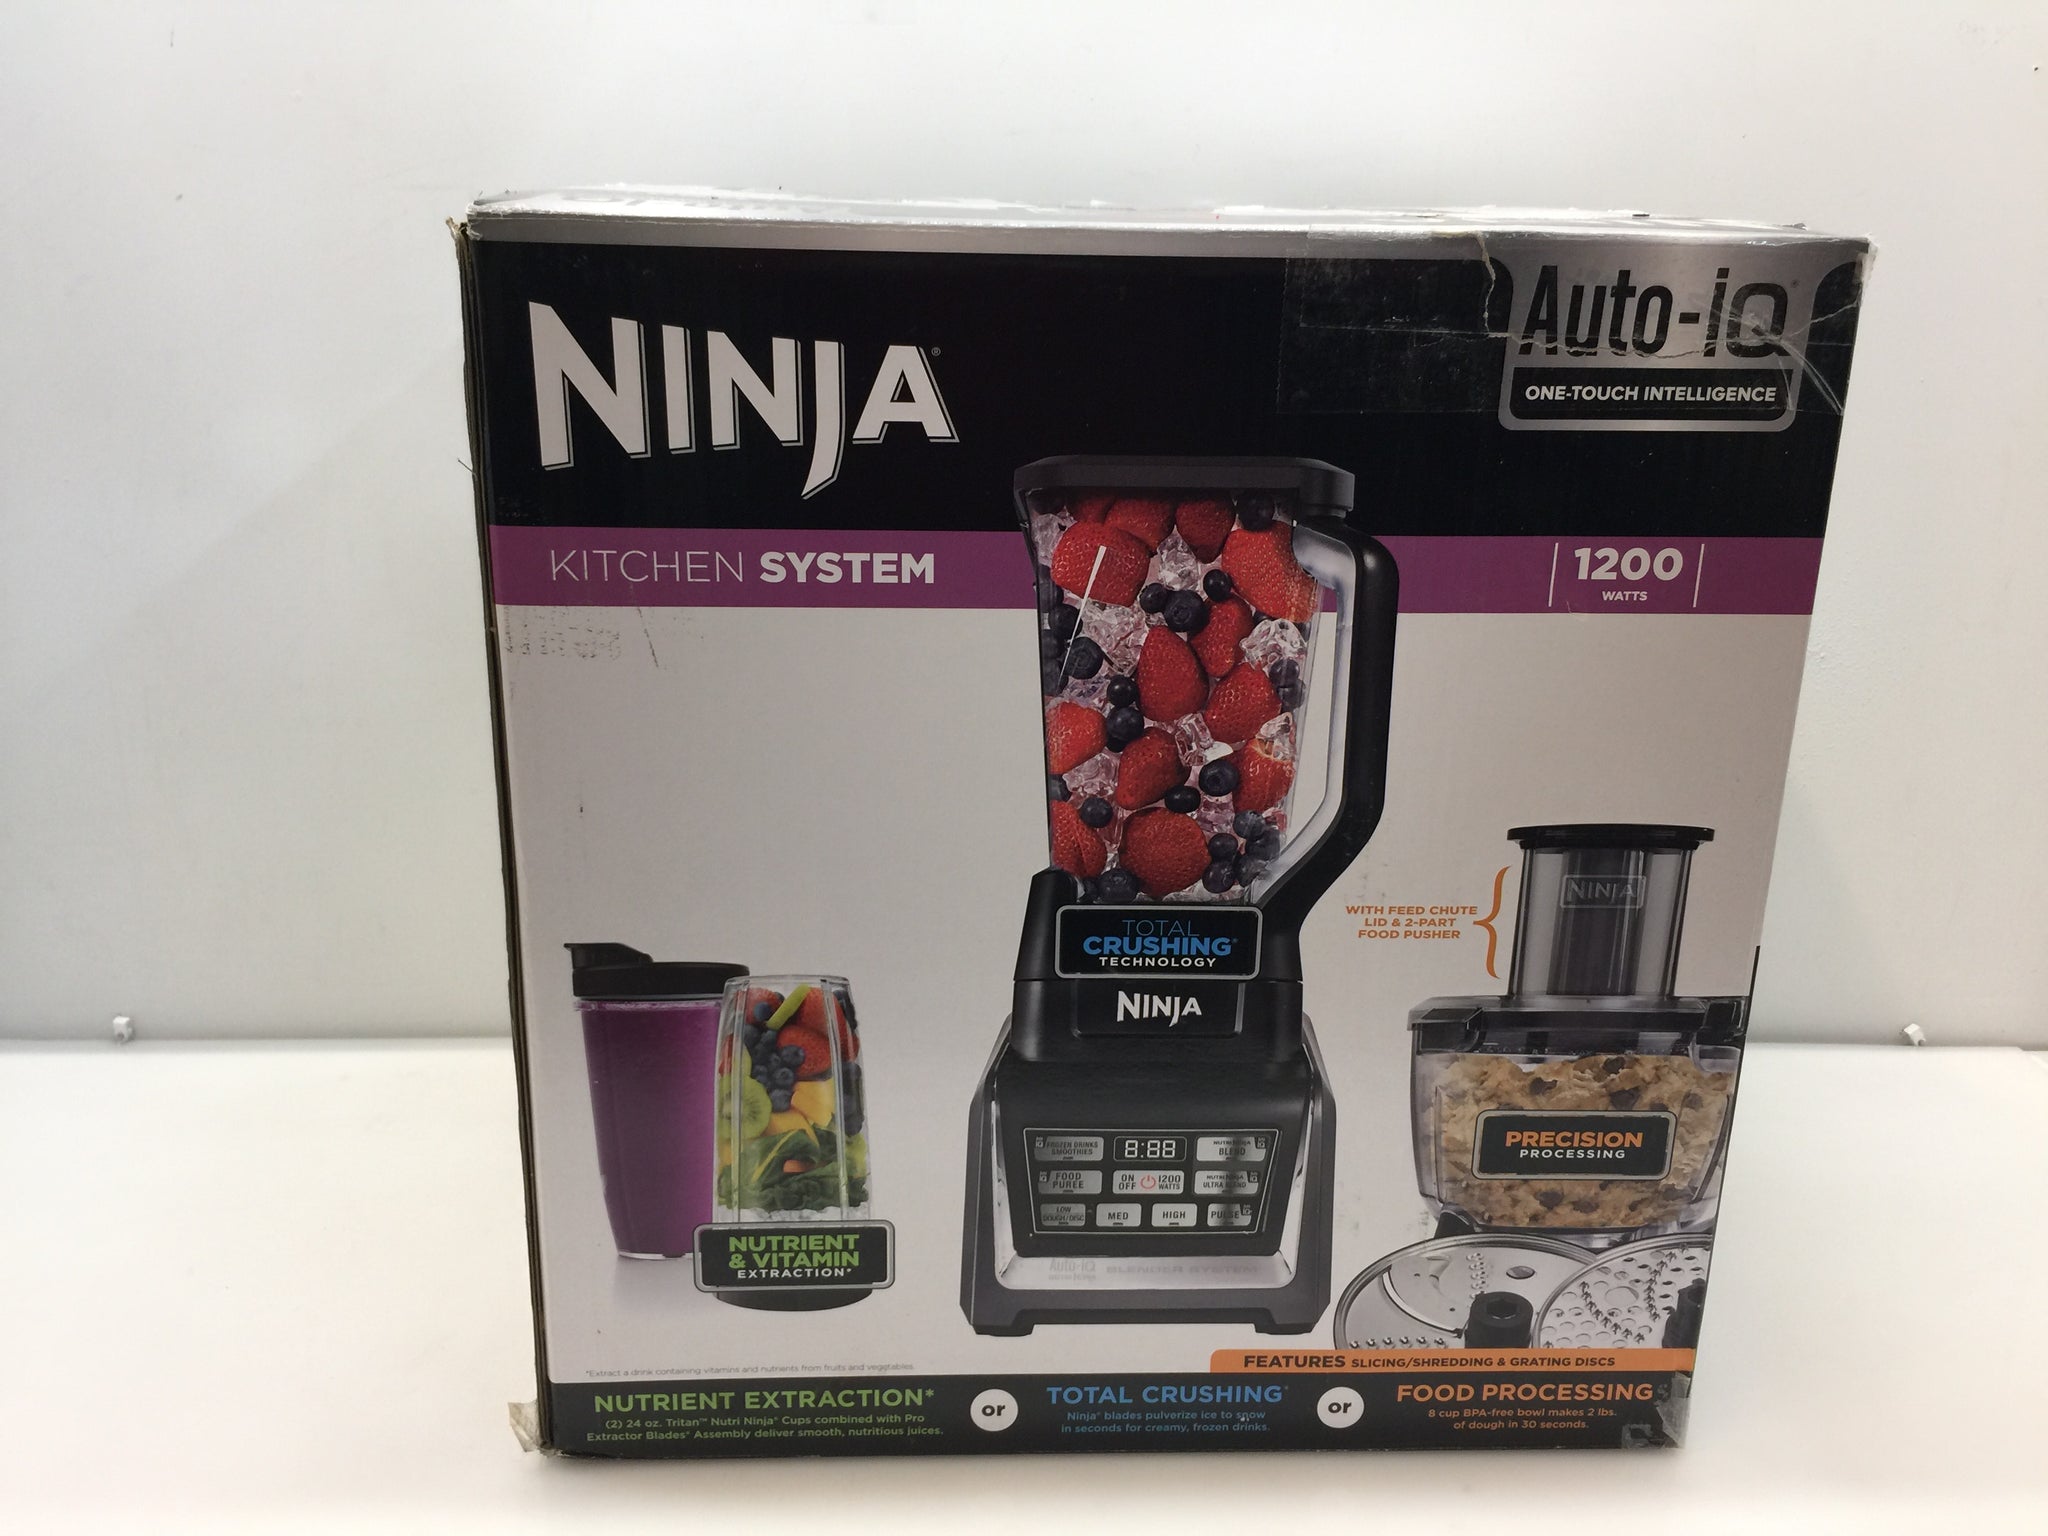 Ninja Auto-IQ Kitchen System